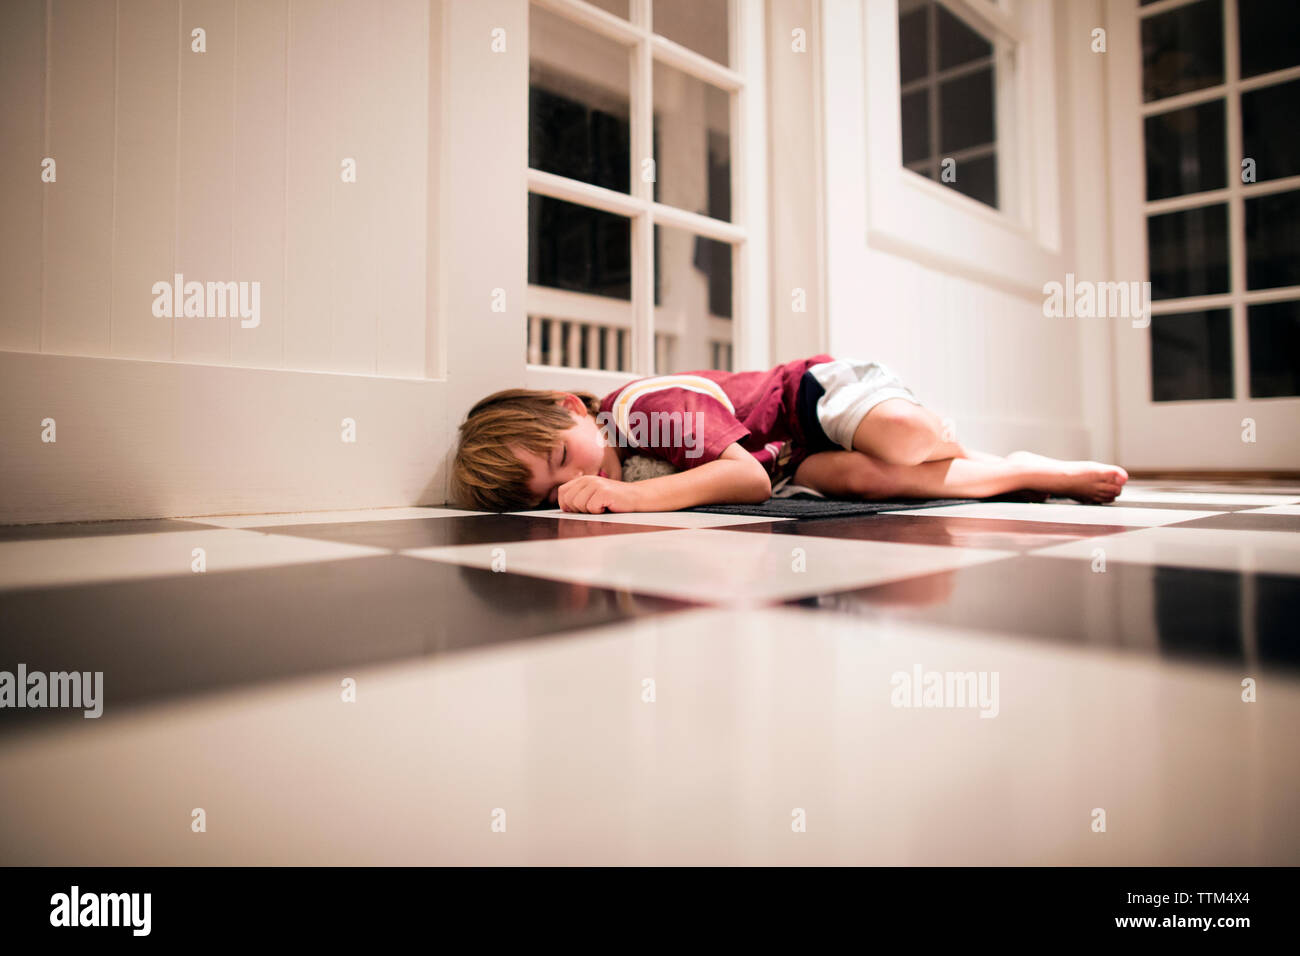 Boy sleeping on floor Stock Photo